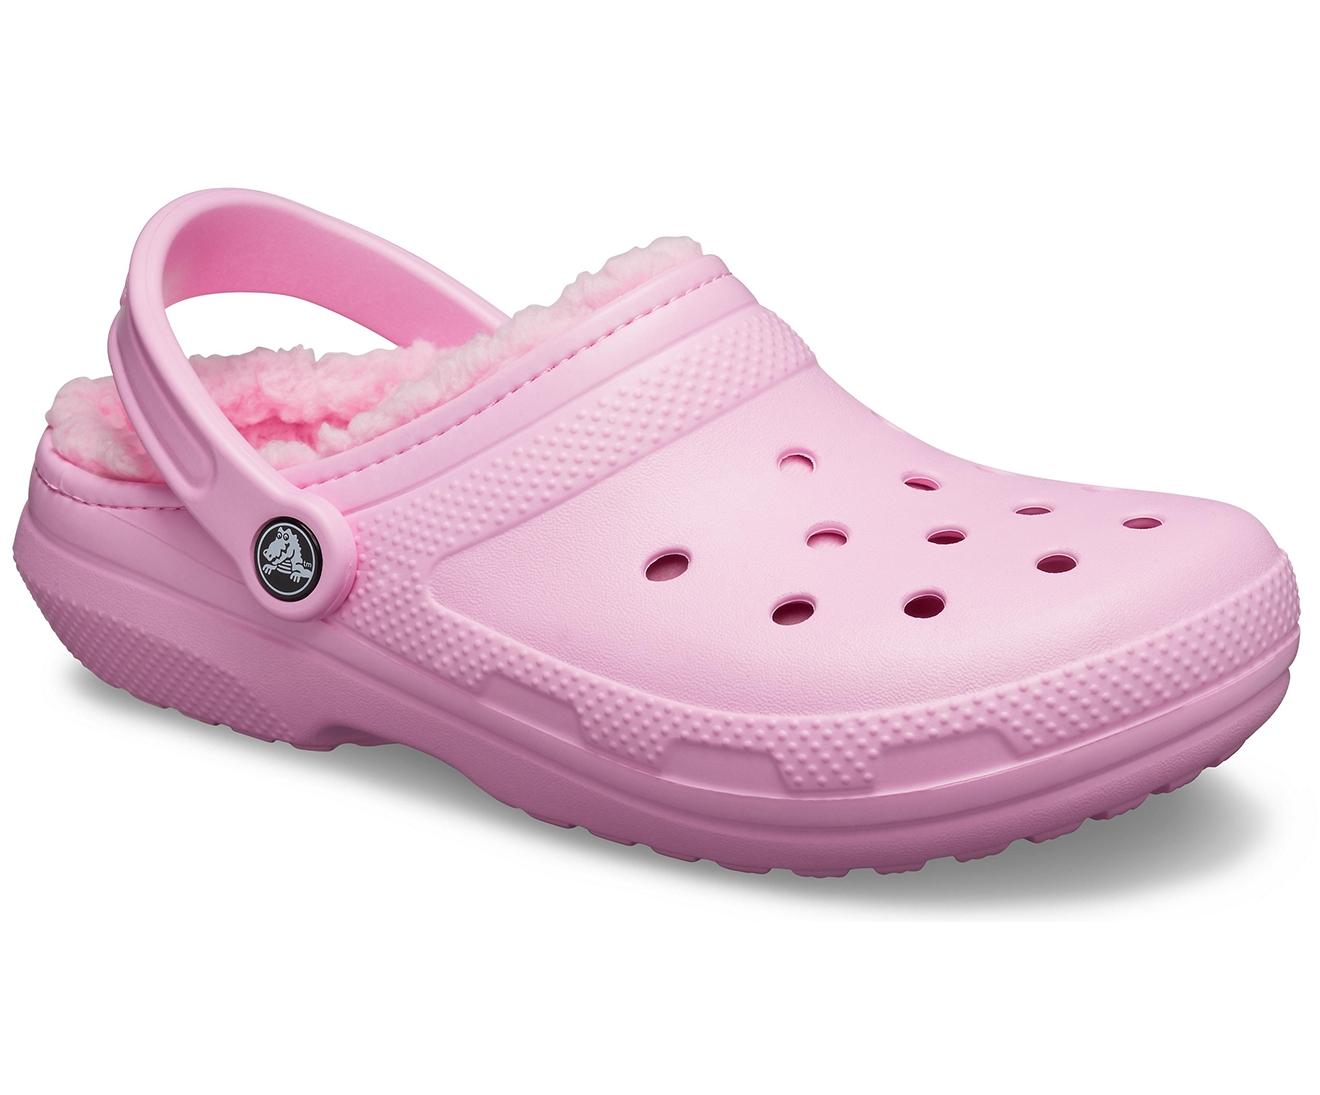 pink crocs with fur